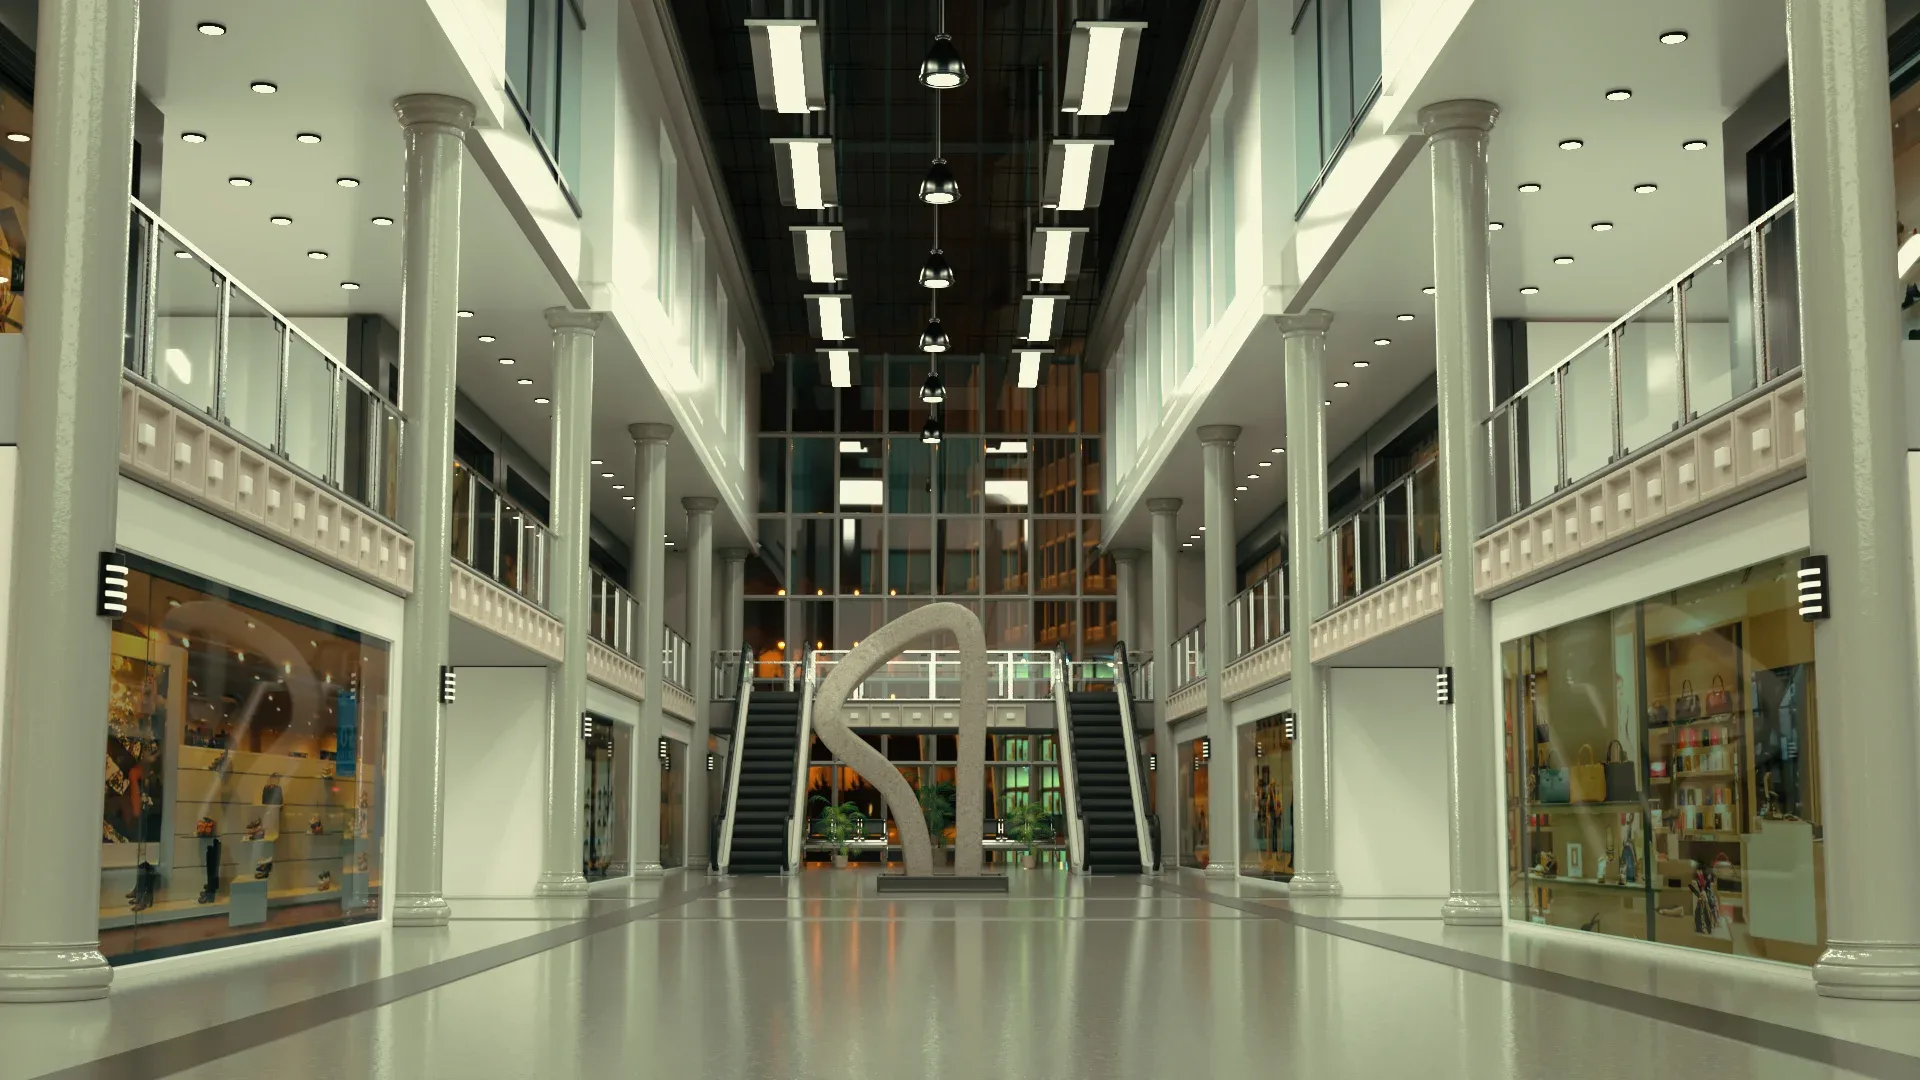 Interior Mall